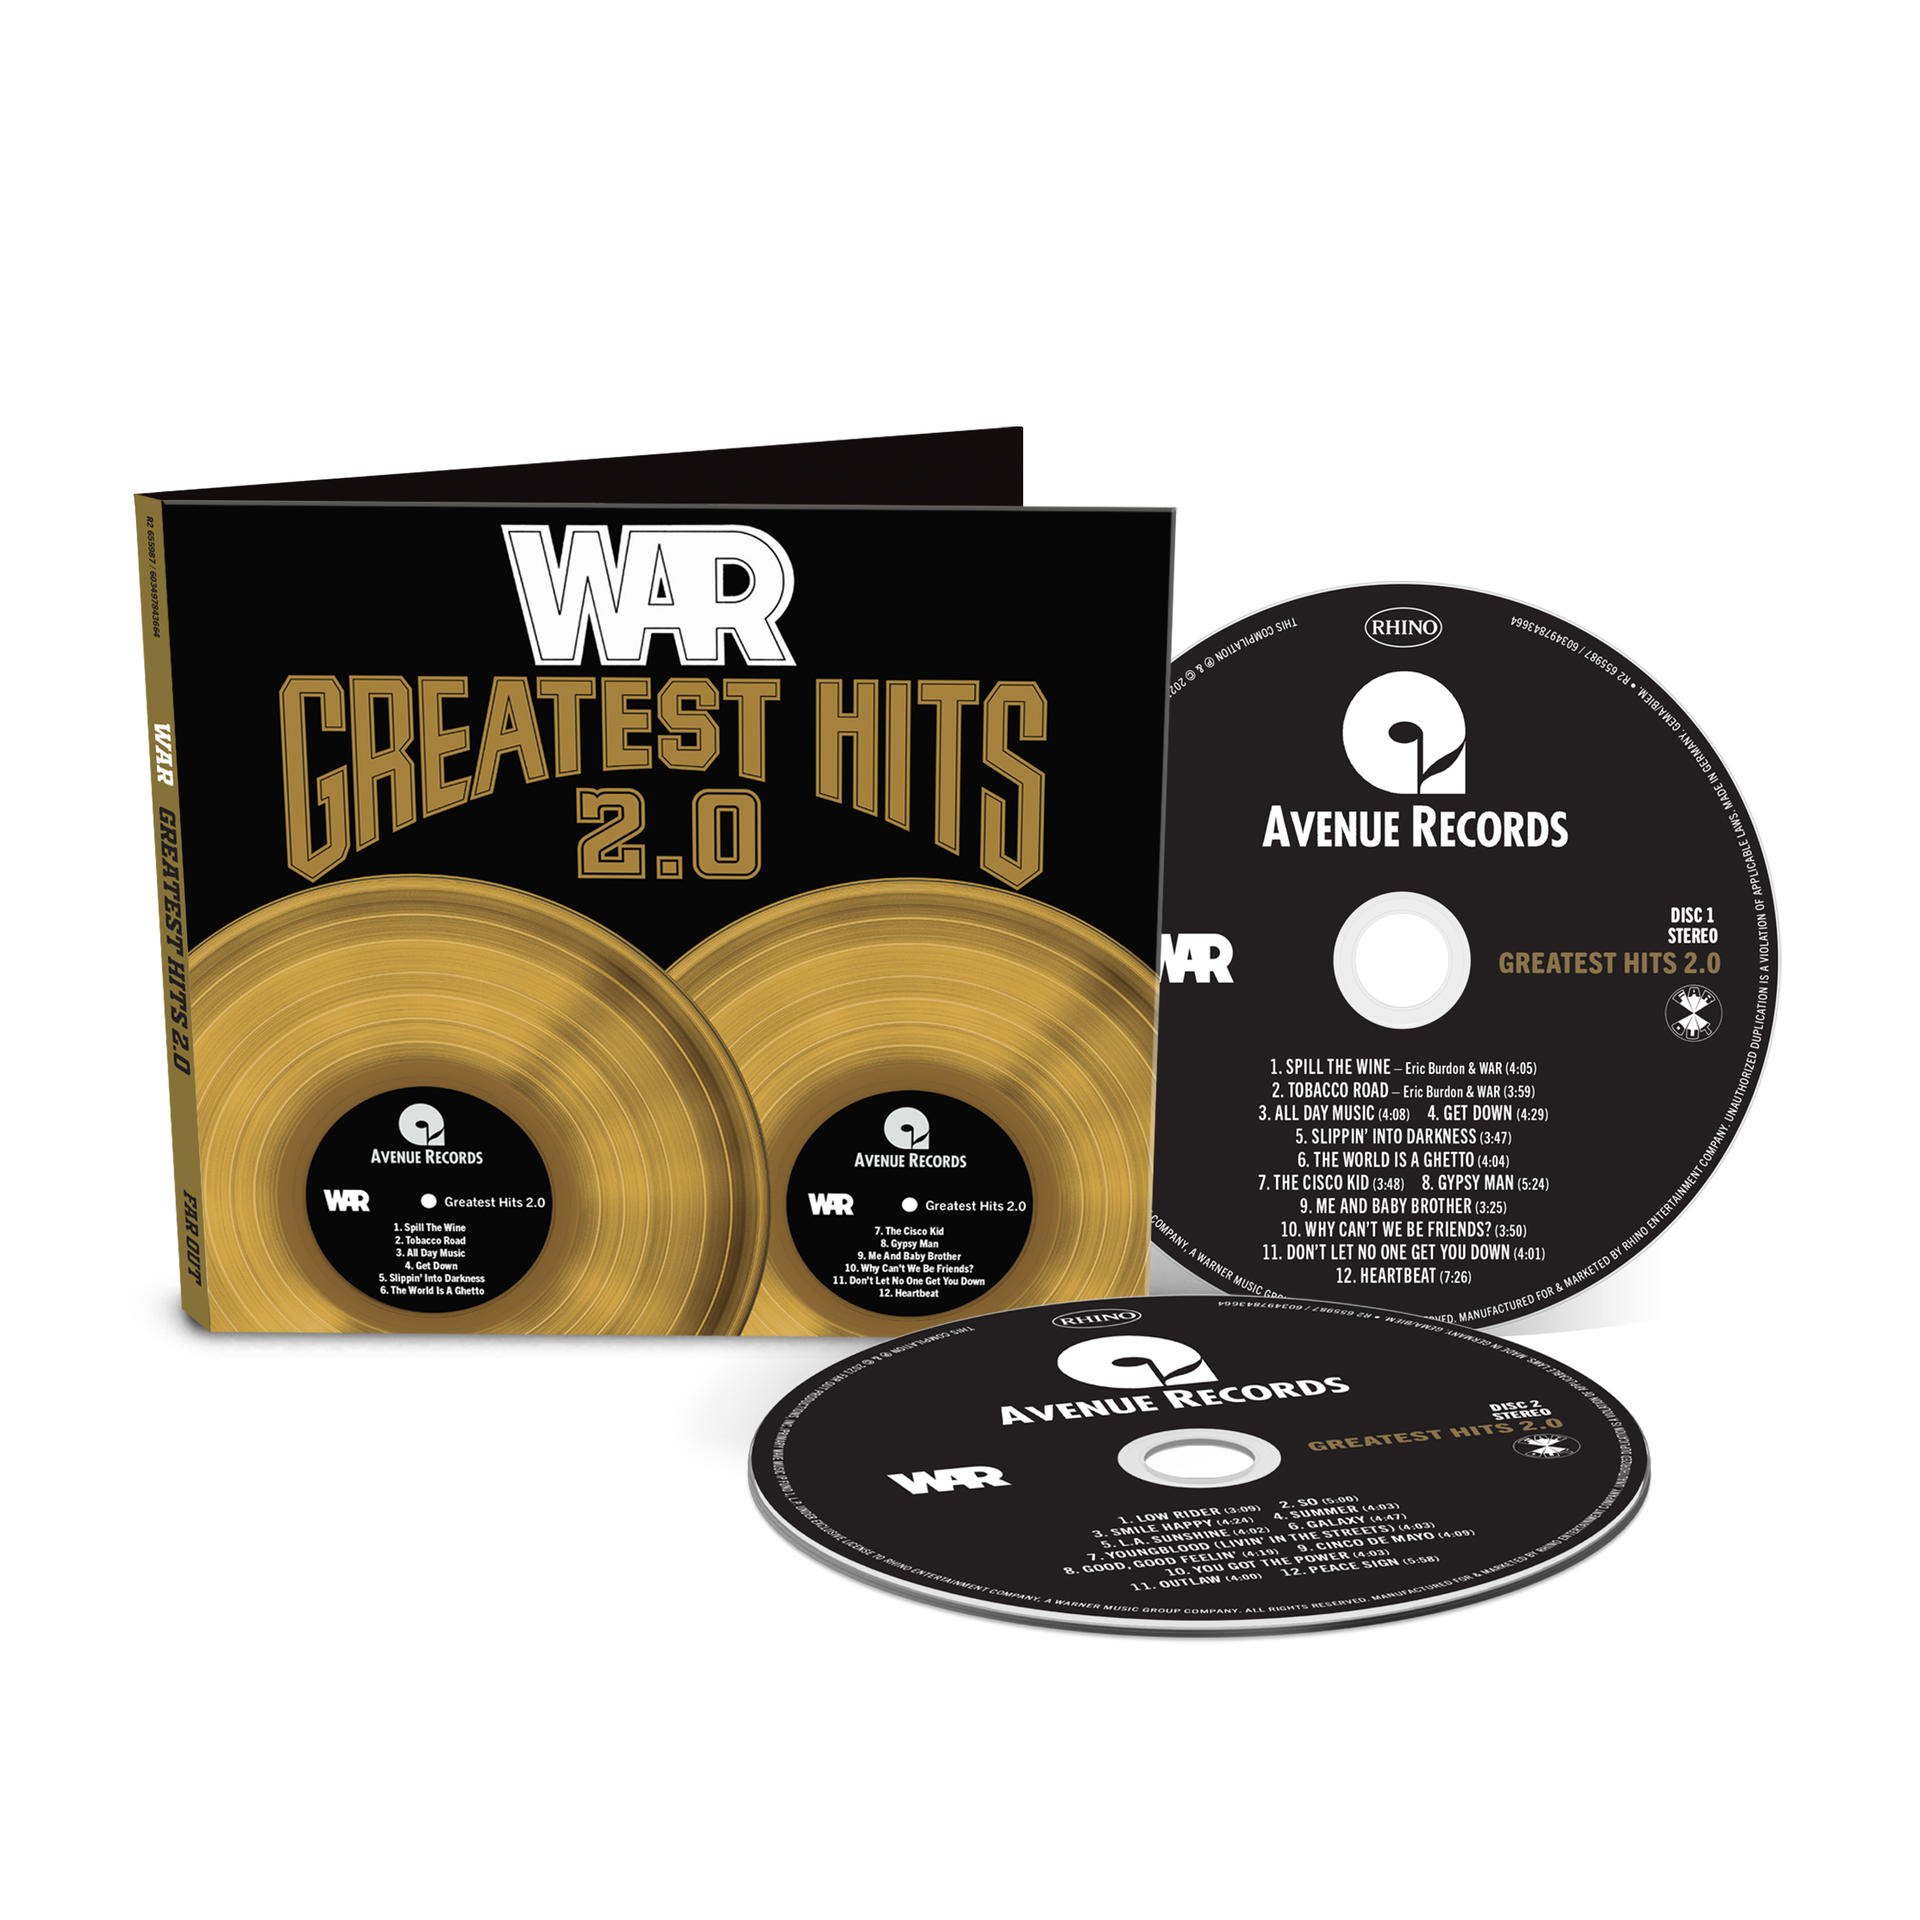 War - Greatest Hits (CD) 2.0 